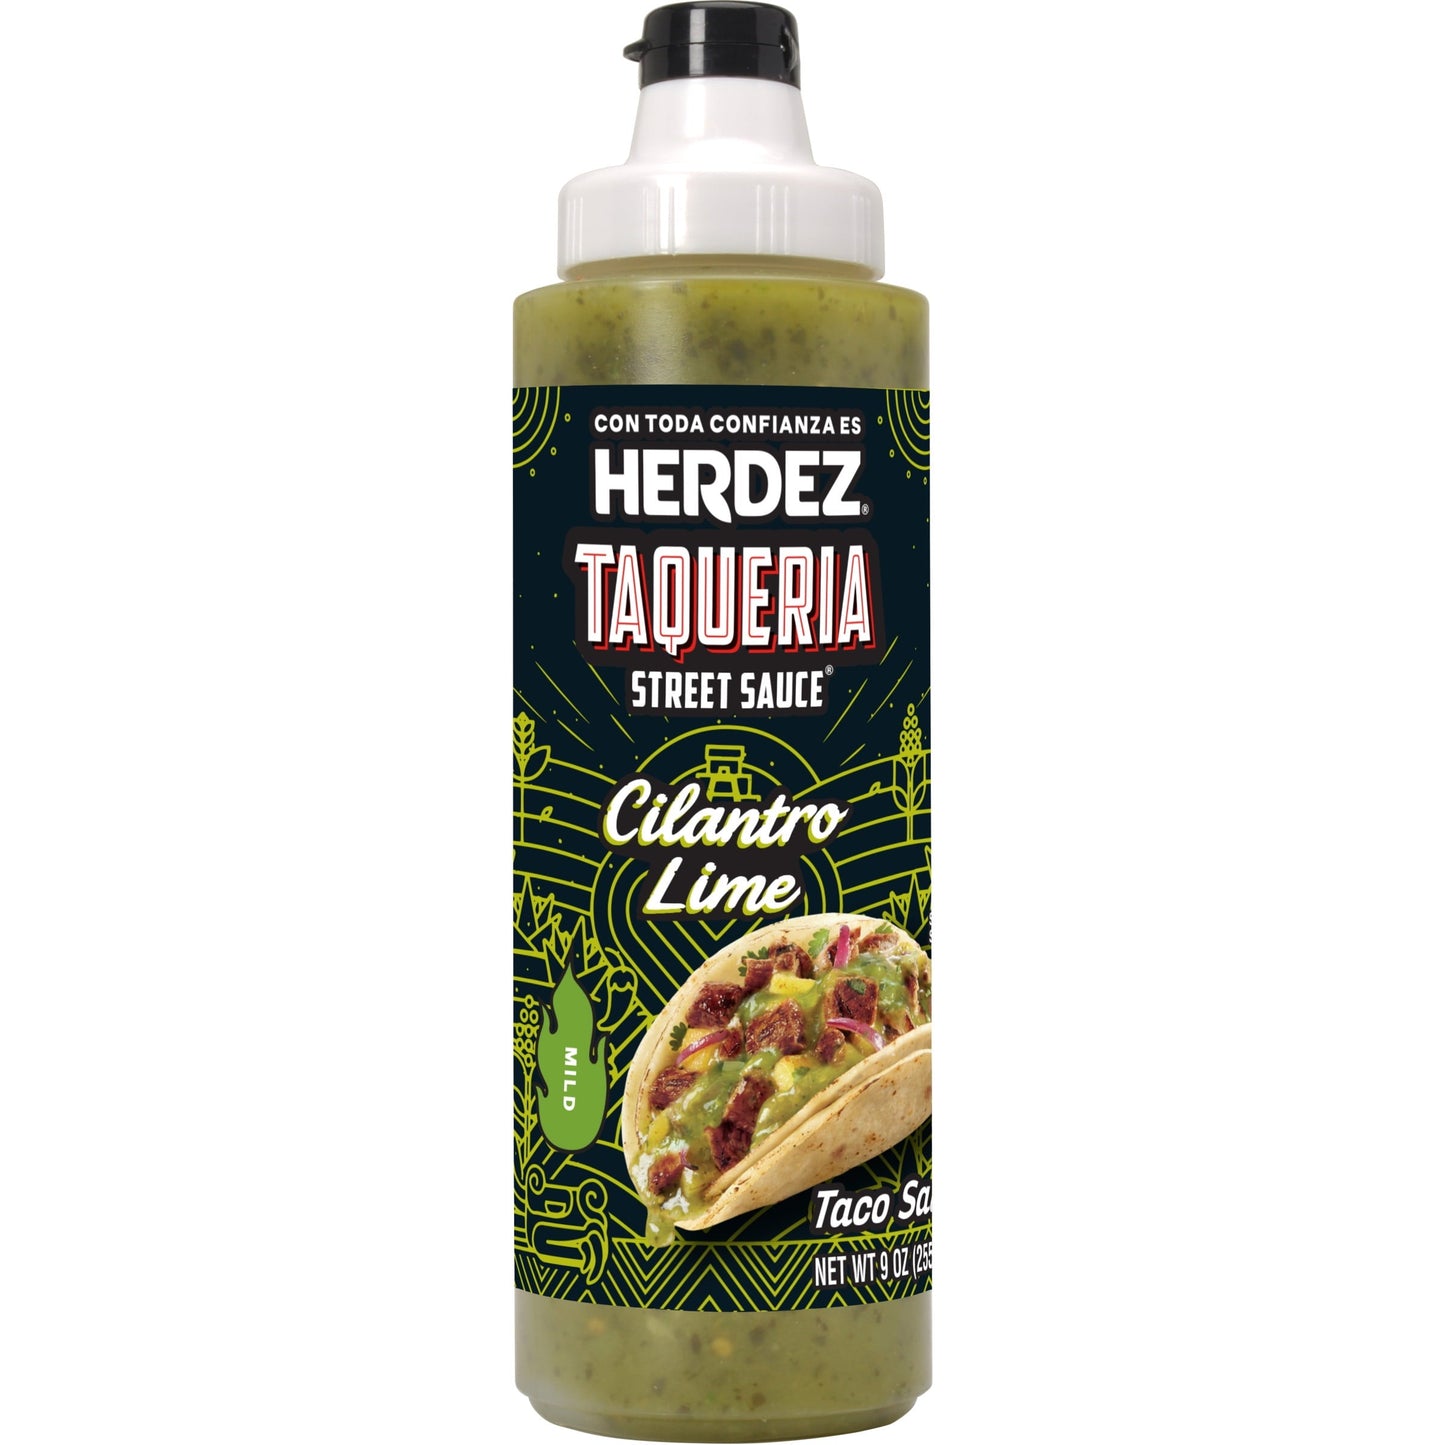 HERDEZ TAQUERIA STREET SAUCE Cilantro Lime Taco Sauce, 9 oz Bottle